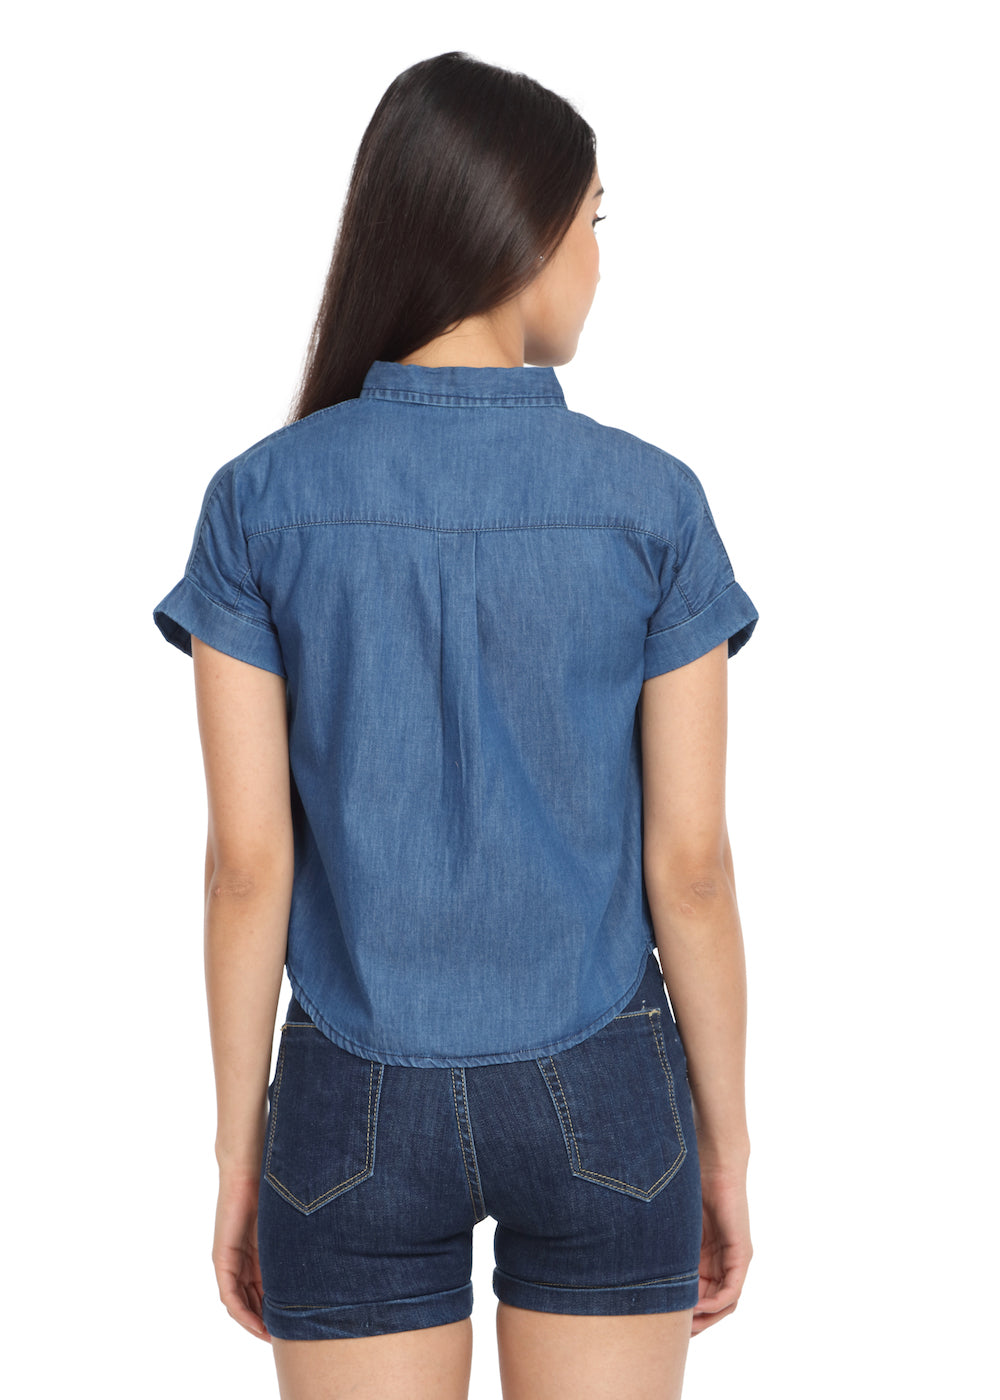 Denim Sleeveless Shirt Dress (Light Indigo Wash) – Holland Cooper ®